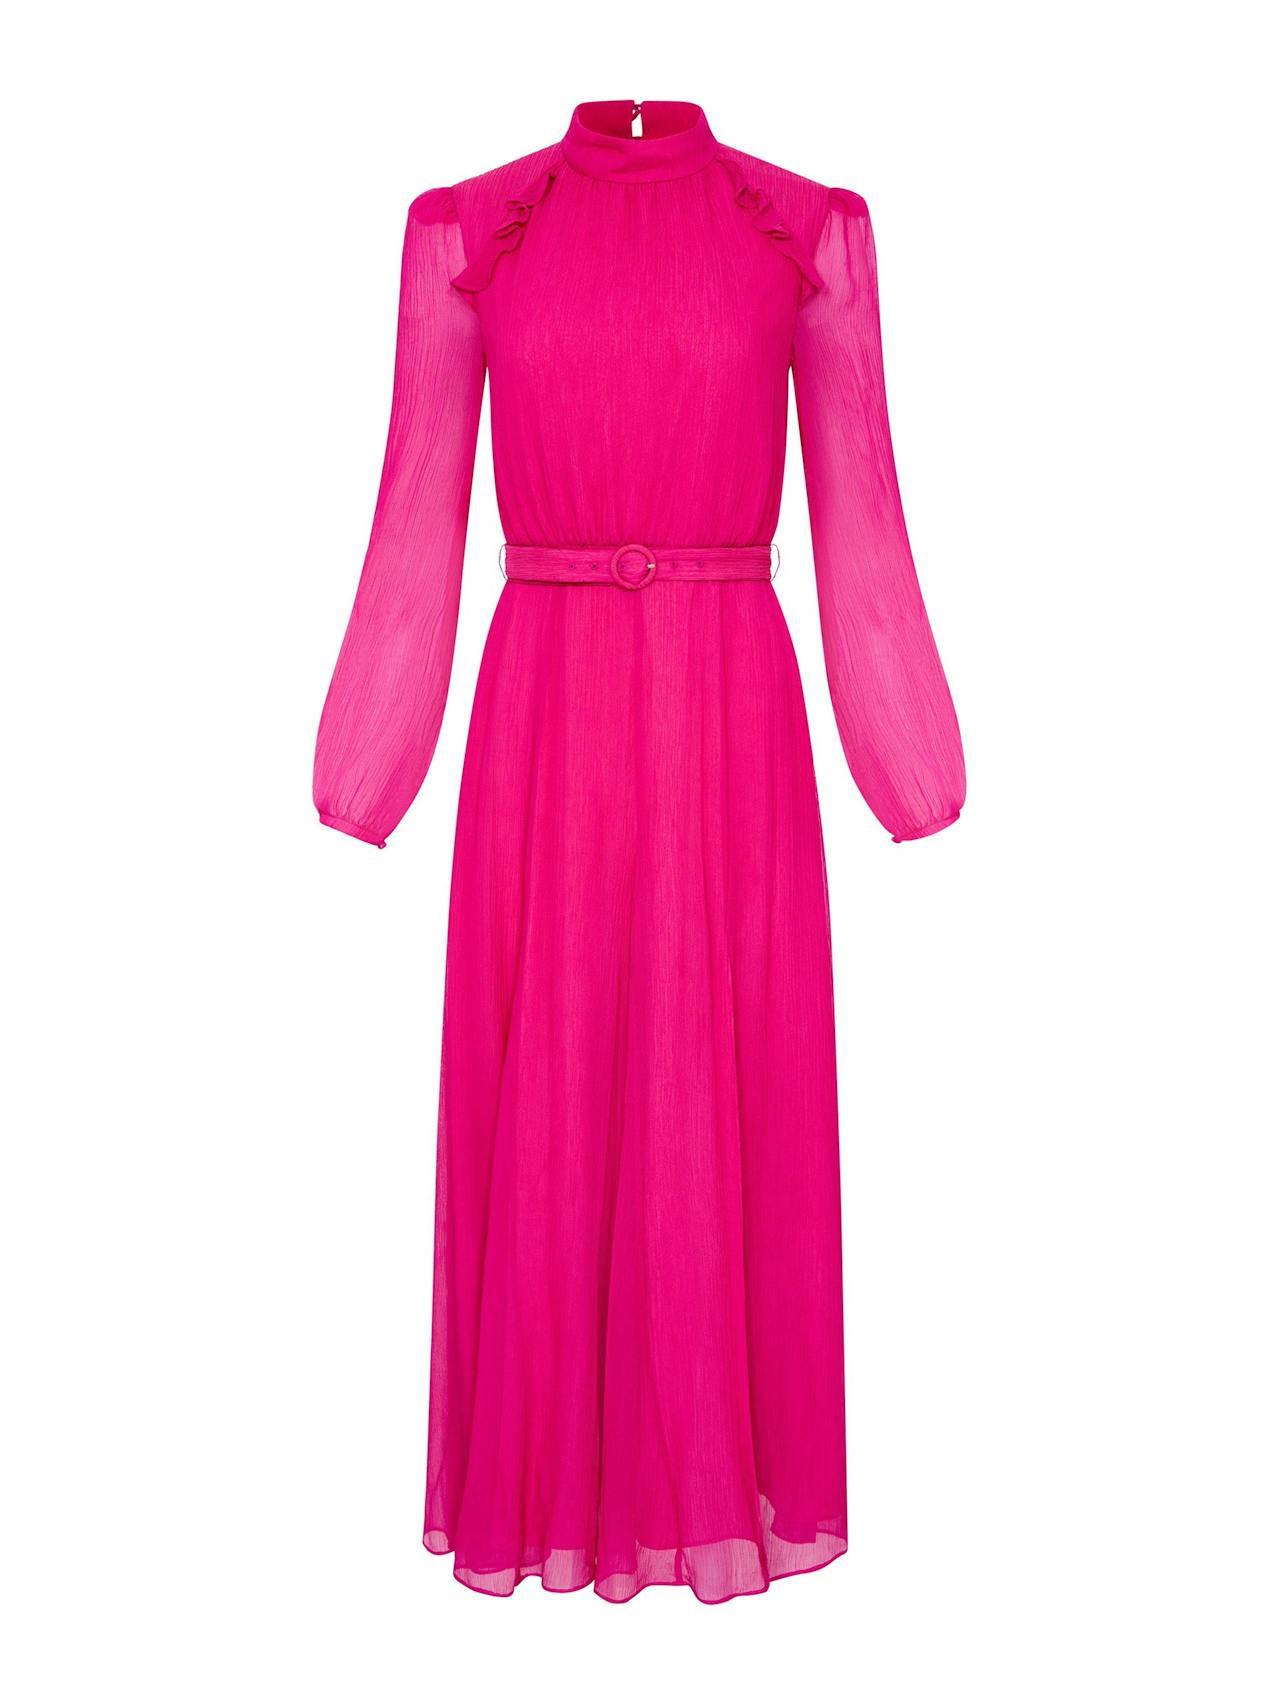 Posey pink Jacqui B dress